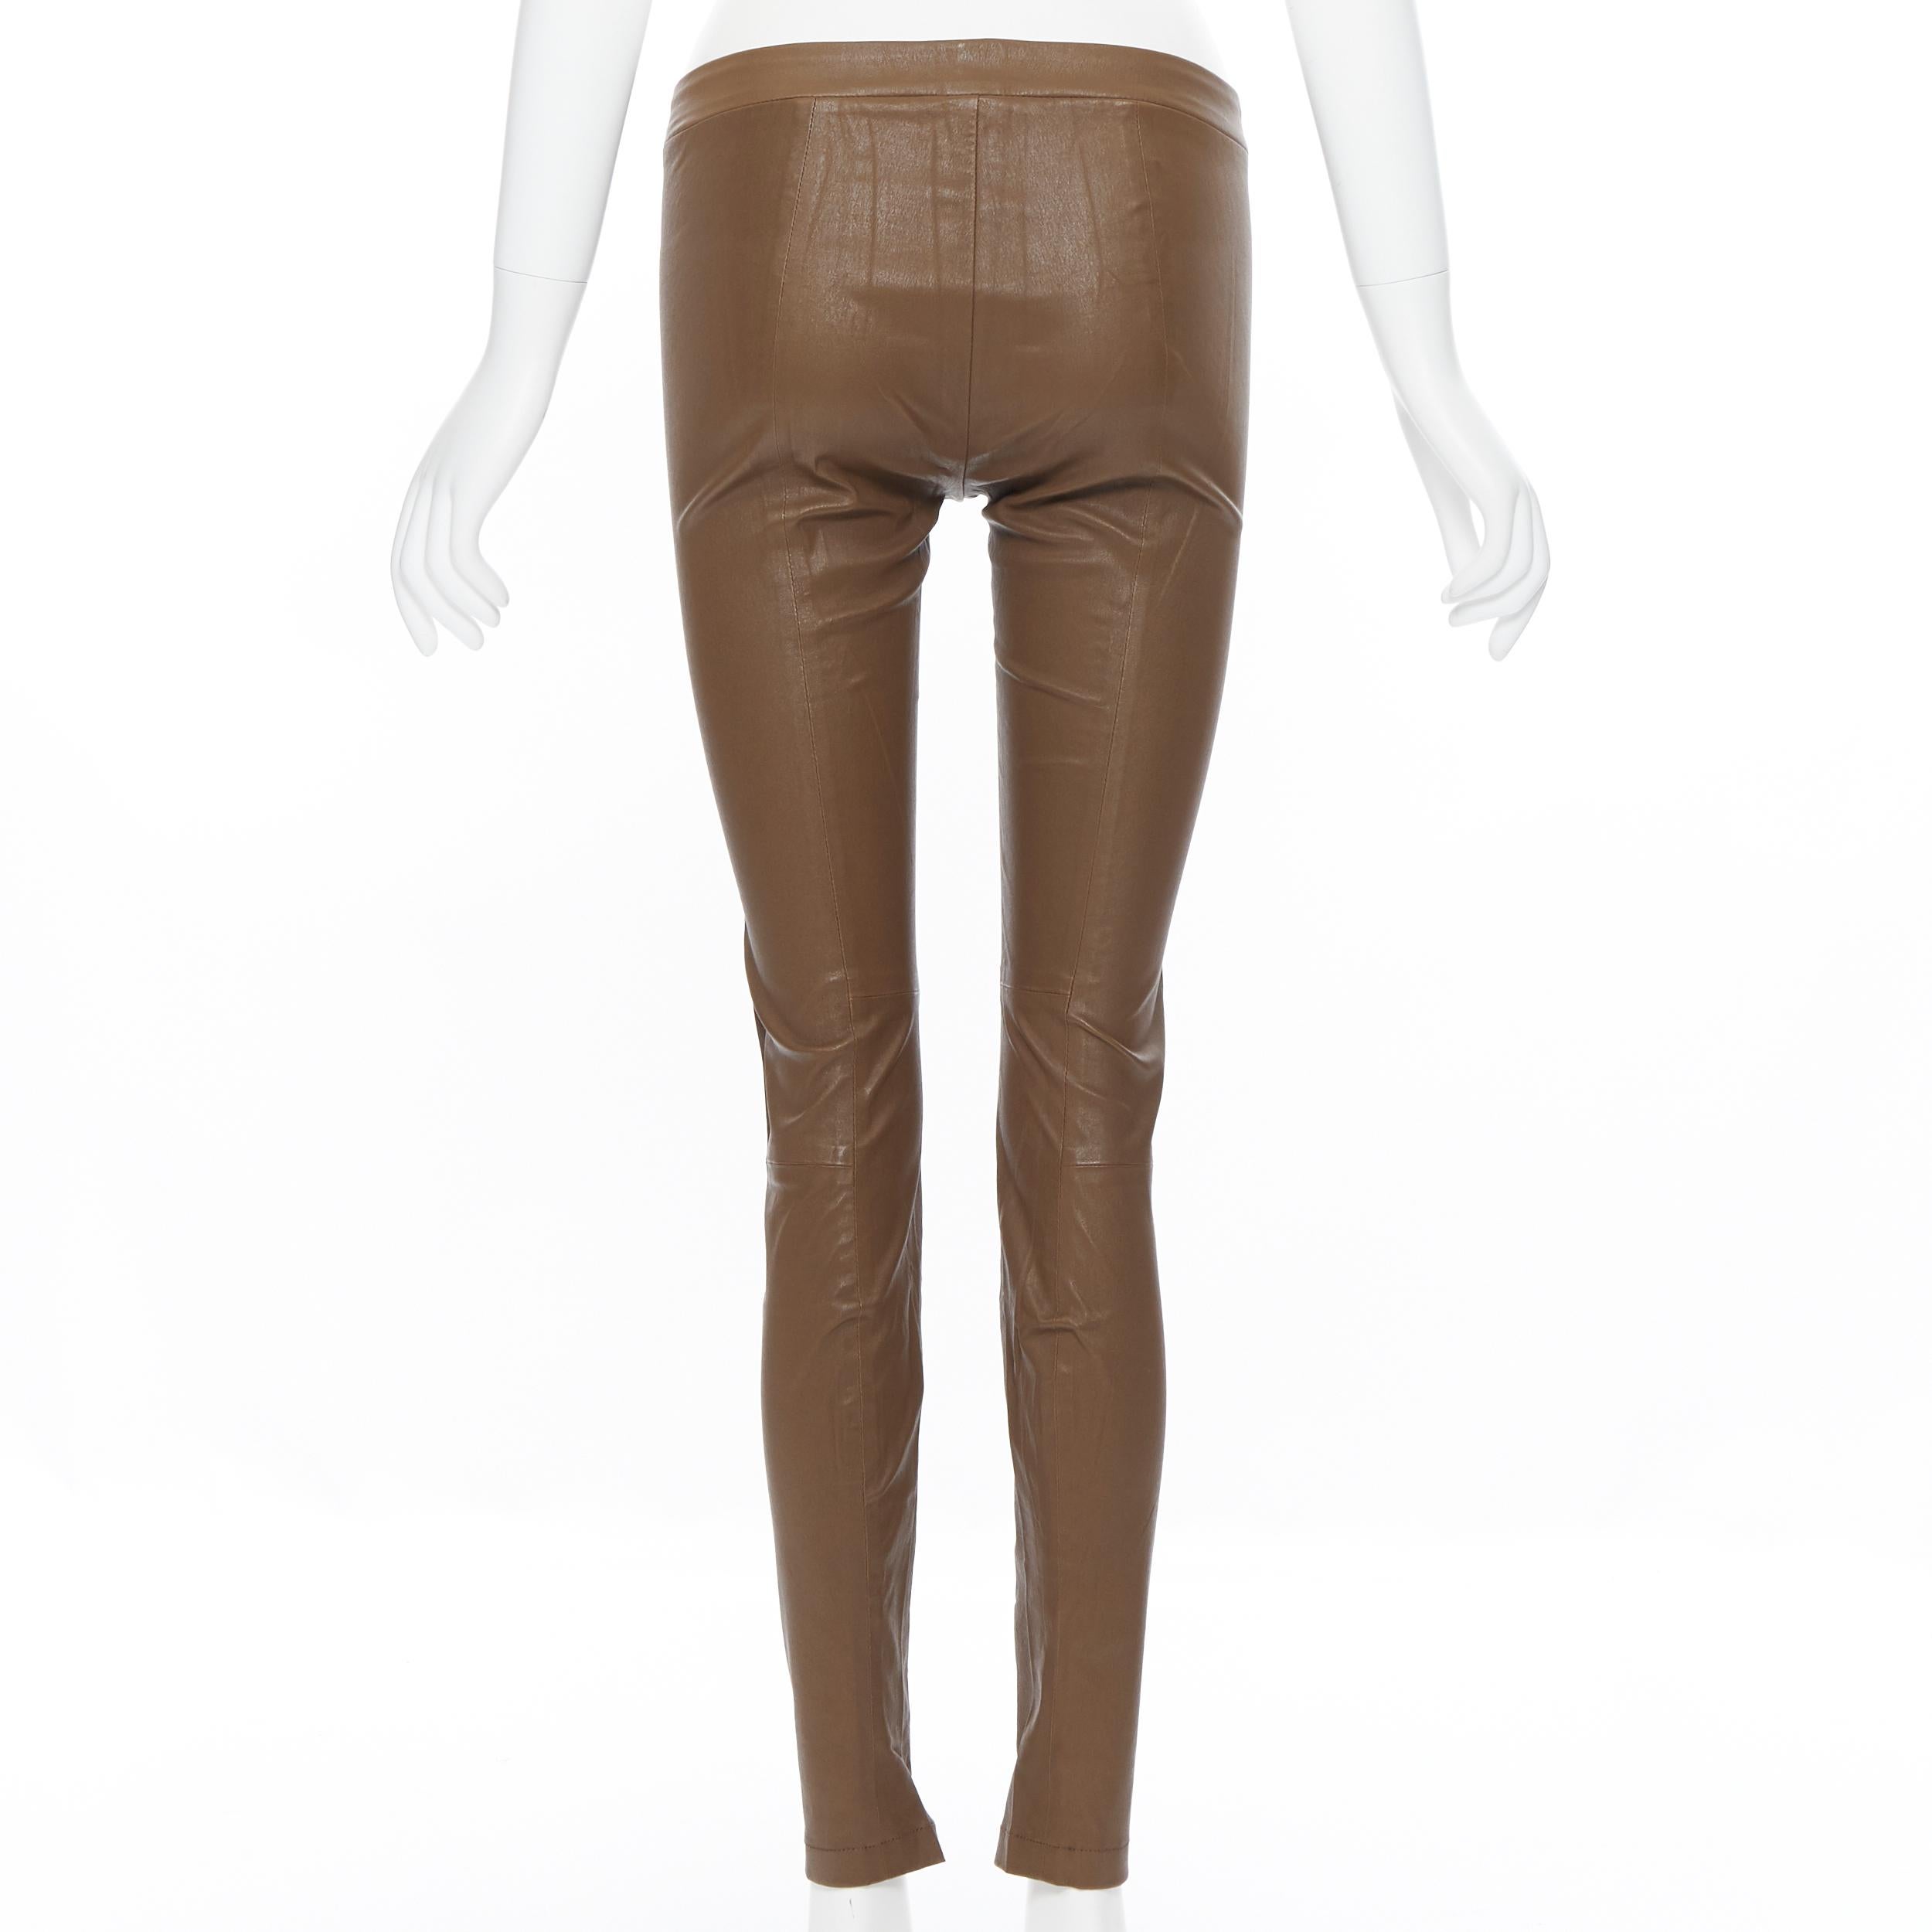 Women's VINCE 100% leather tan brown minimal stretchy skinny leg pants XS